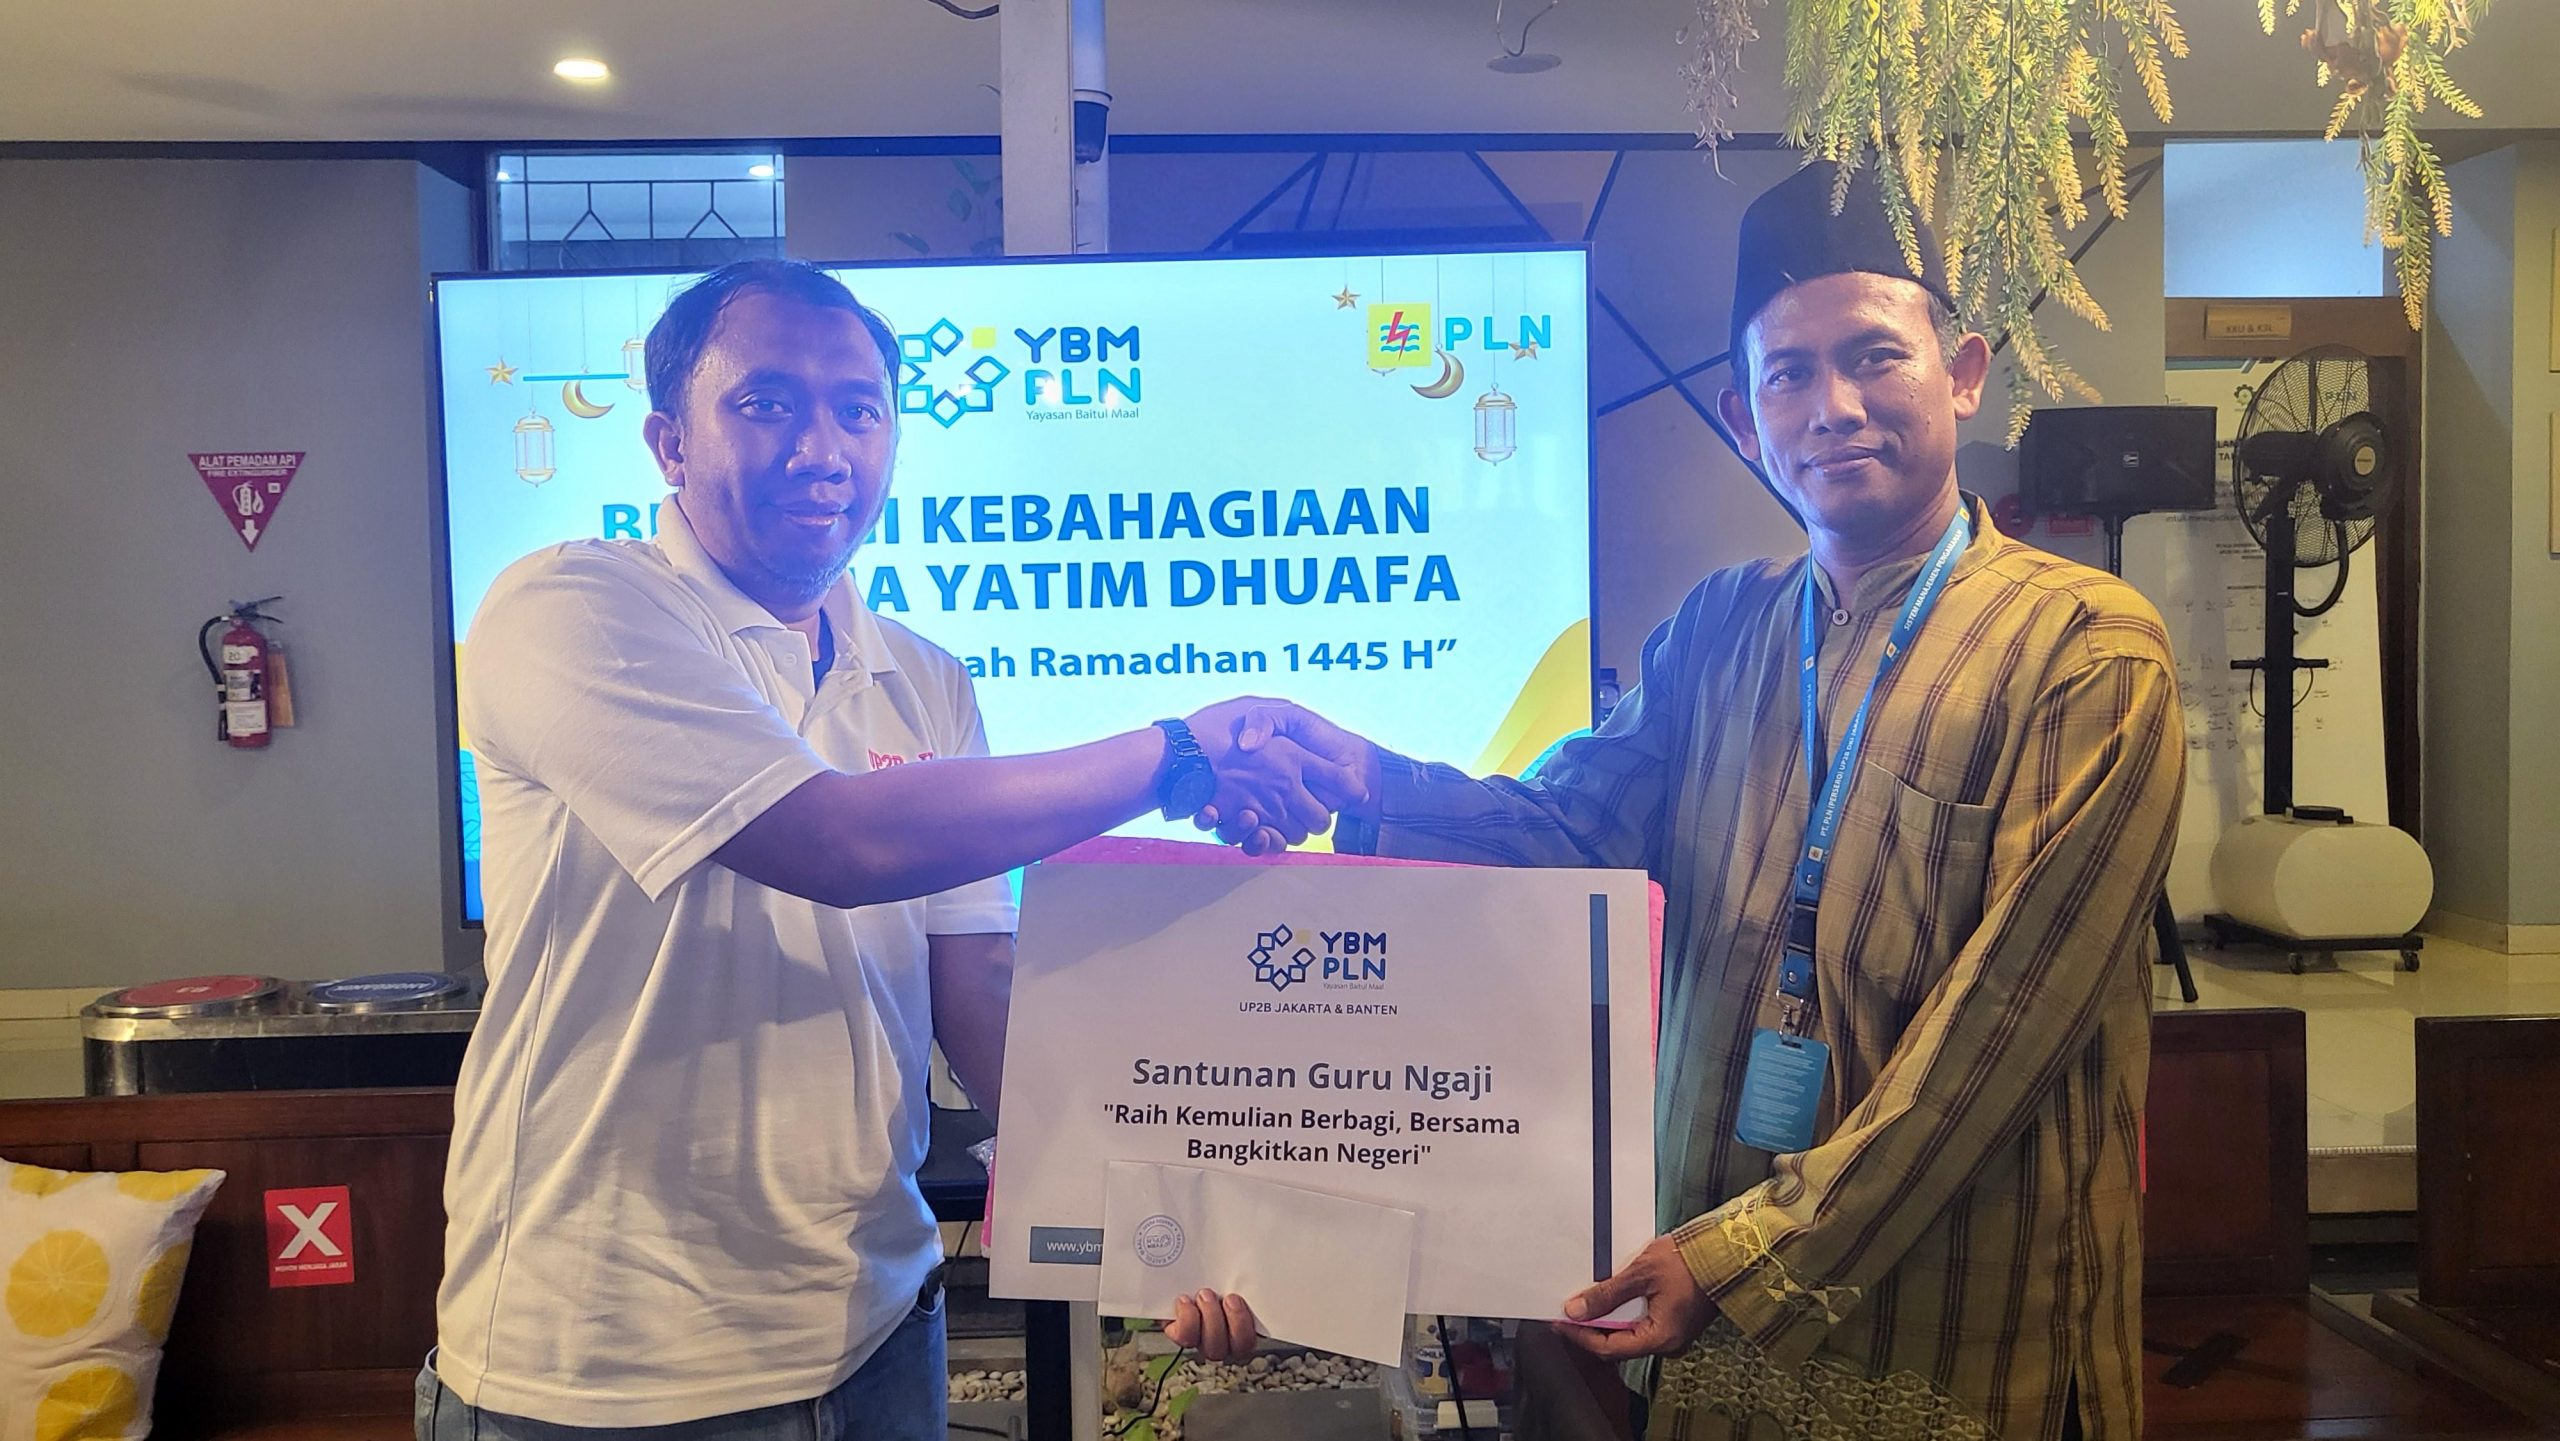 Jelang Idul Fitri, YBM UP2B DKI Jakarta Bagikan Paket Sembako pada Kaum Dhuafa